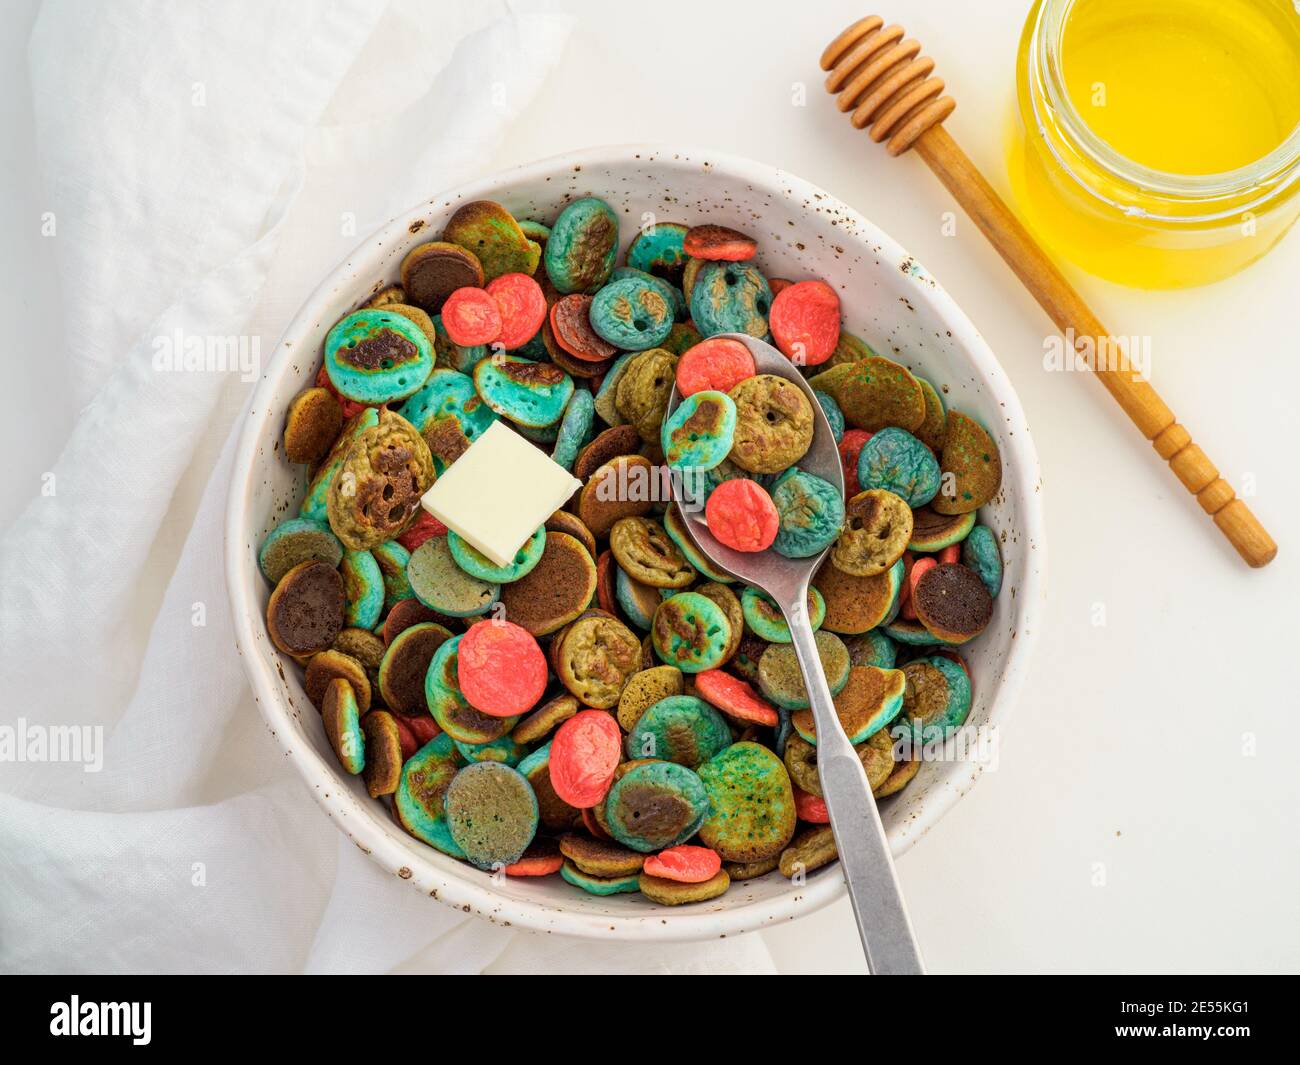 Cibo alla moda - cereali pancake. Un mucchio di mini frittelle di cereali colorate. Minuscoli pancake di colore naturale: Matcha verde, spirulina turchese, piselli blu, frutti rossi Foto Stock